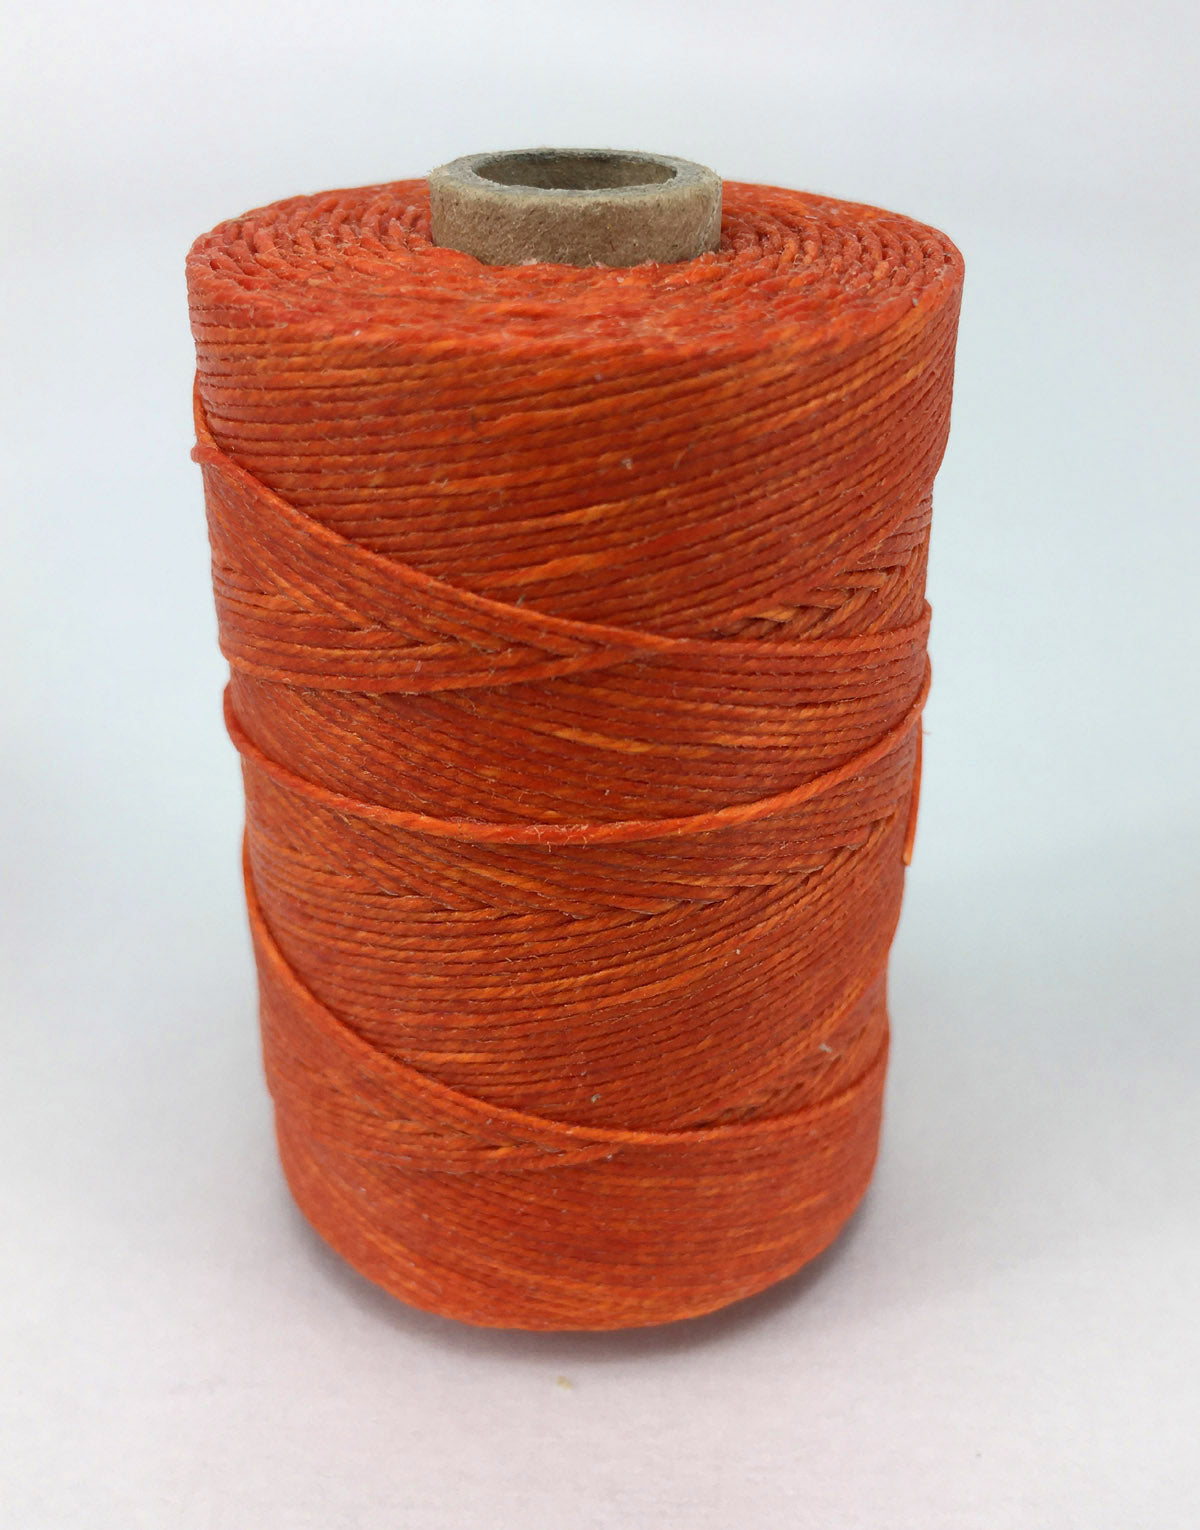 Vermillion Orange- Per spool 50g- 100% Pure Linen Thread- Waxed- 18/3 No.18 Cord 3- Approx 0.55mm thick